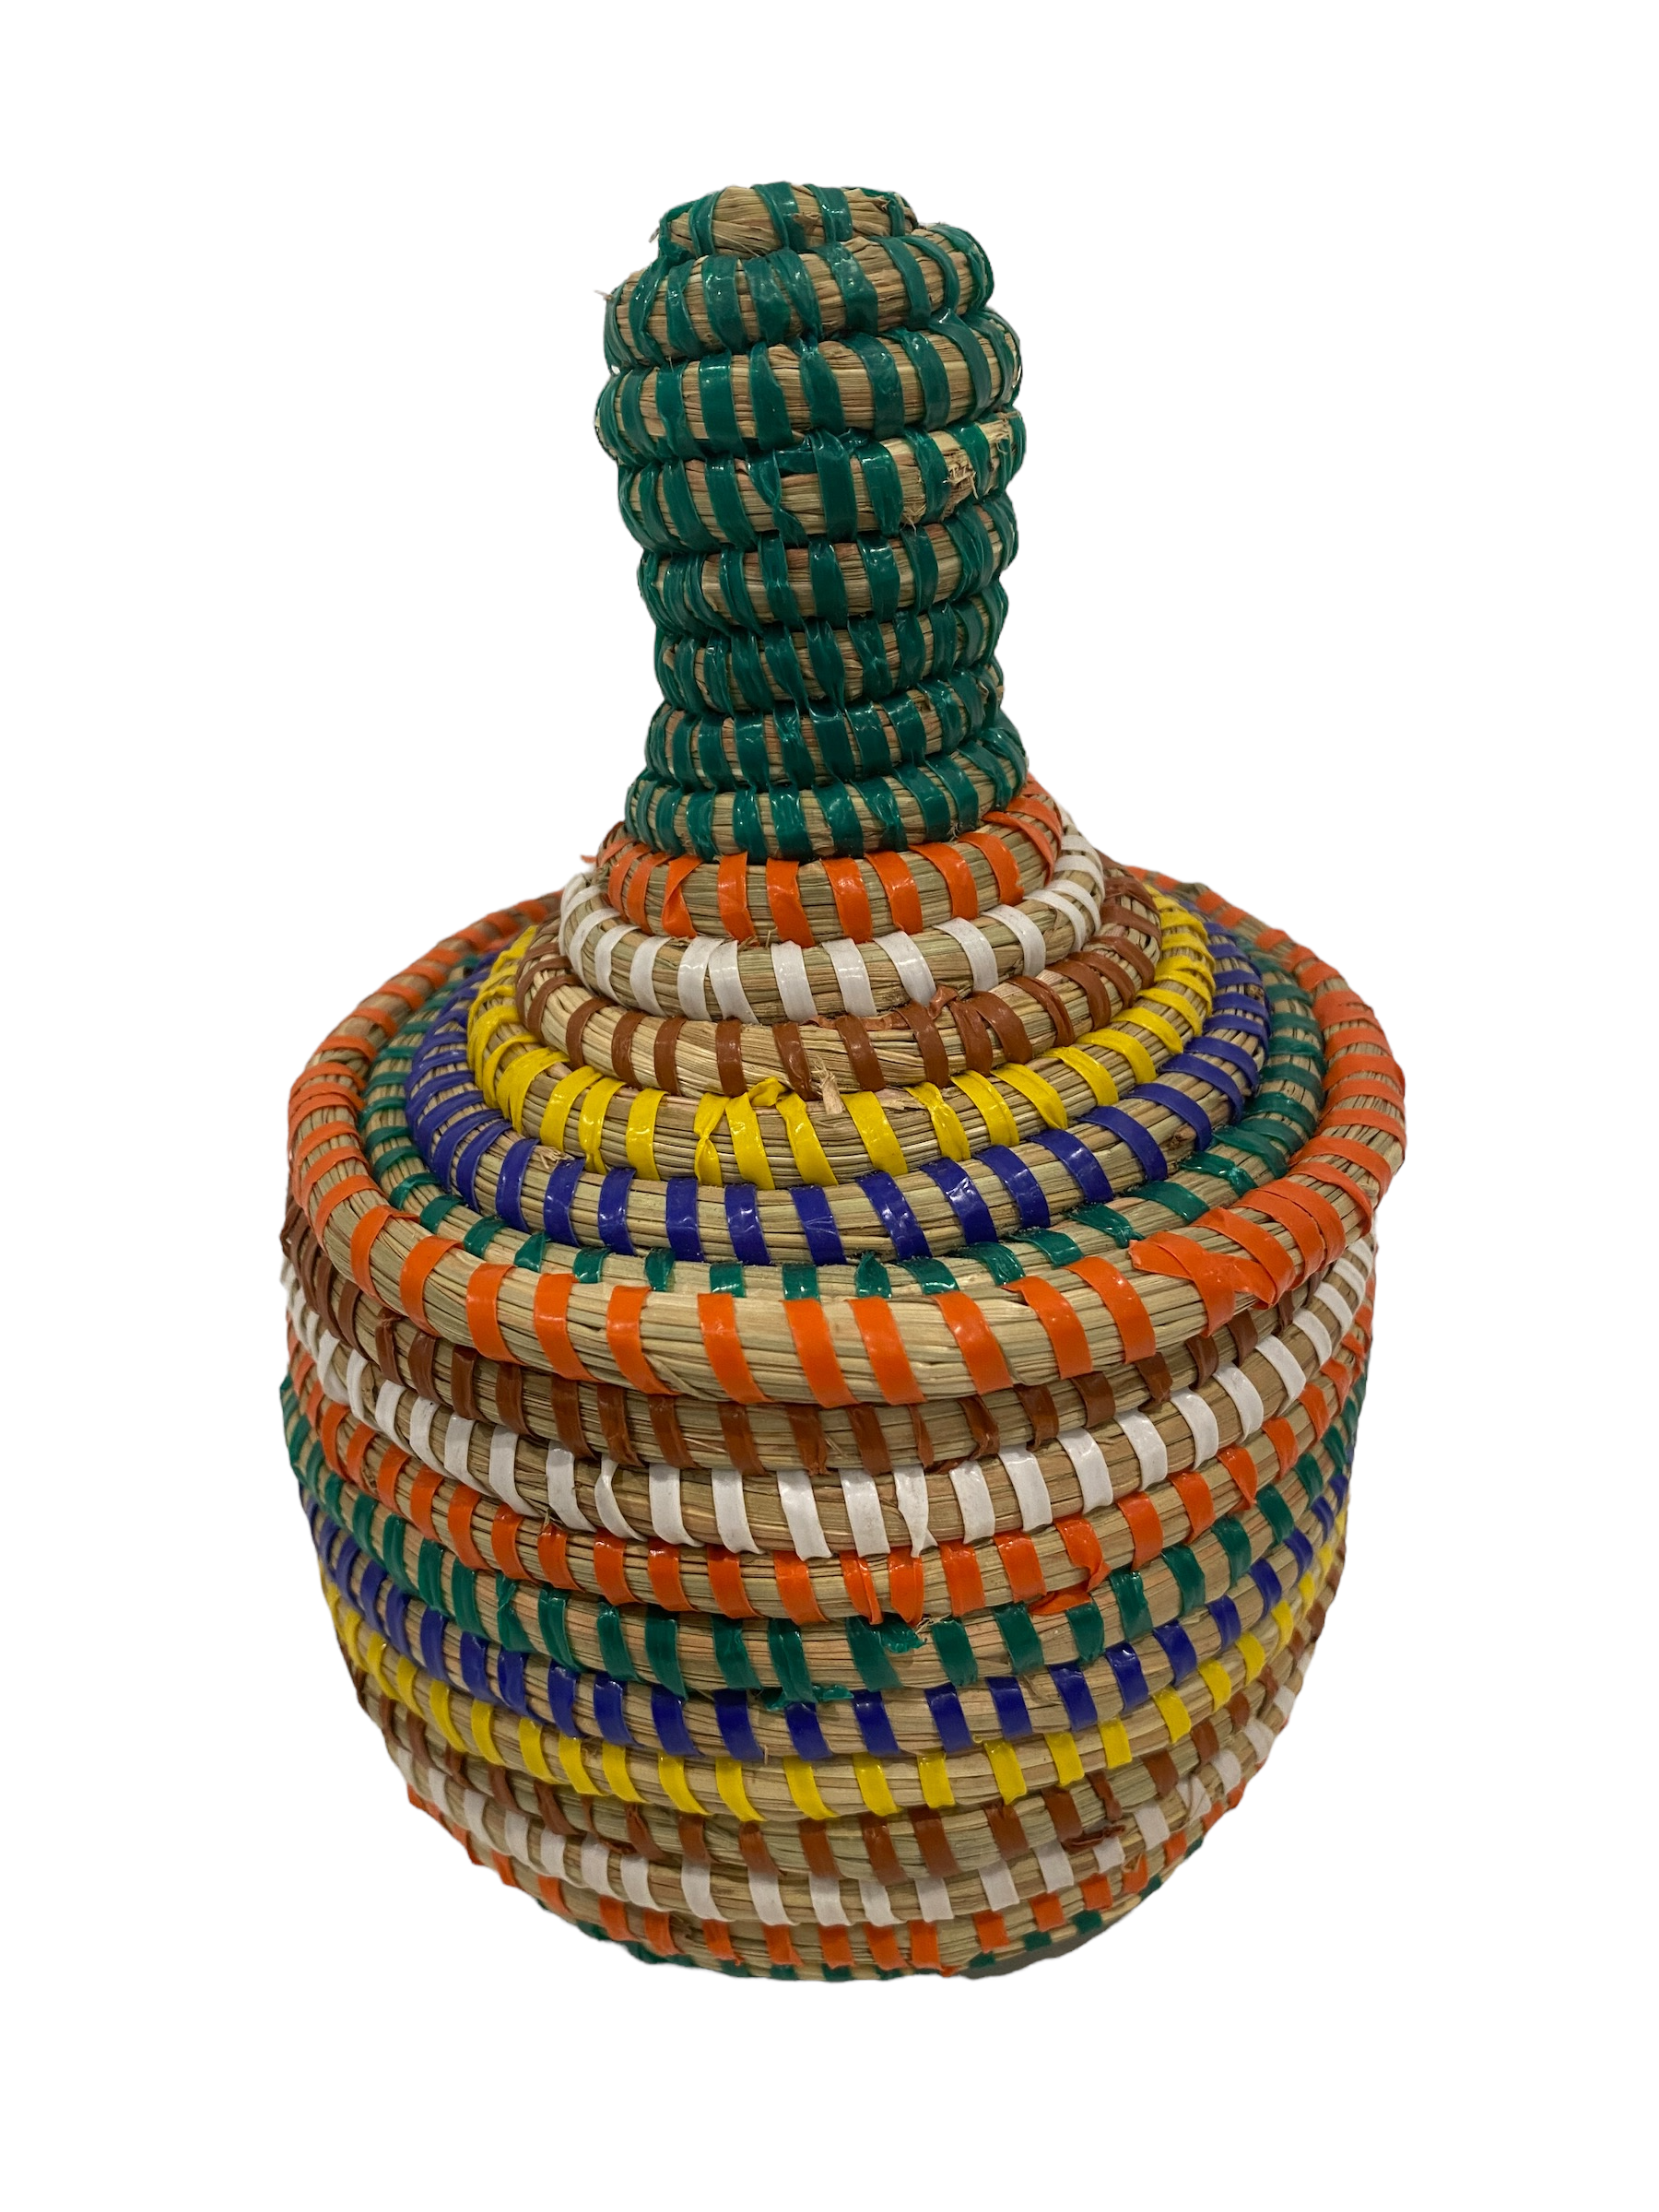 Senegal Basket Small - (5808)